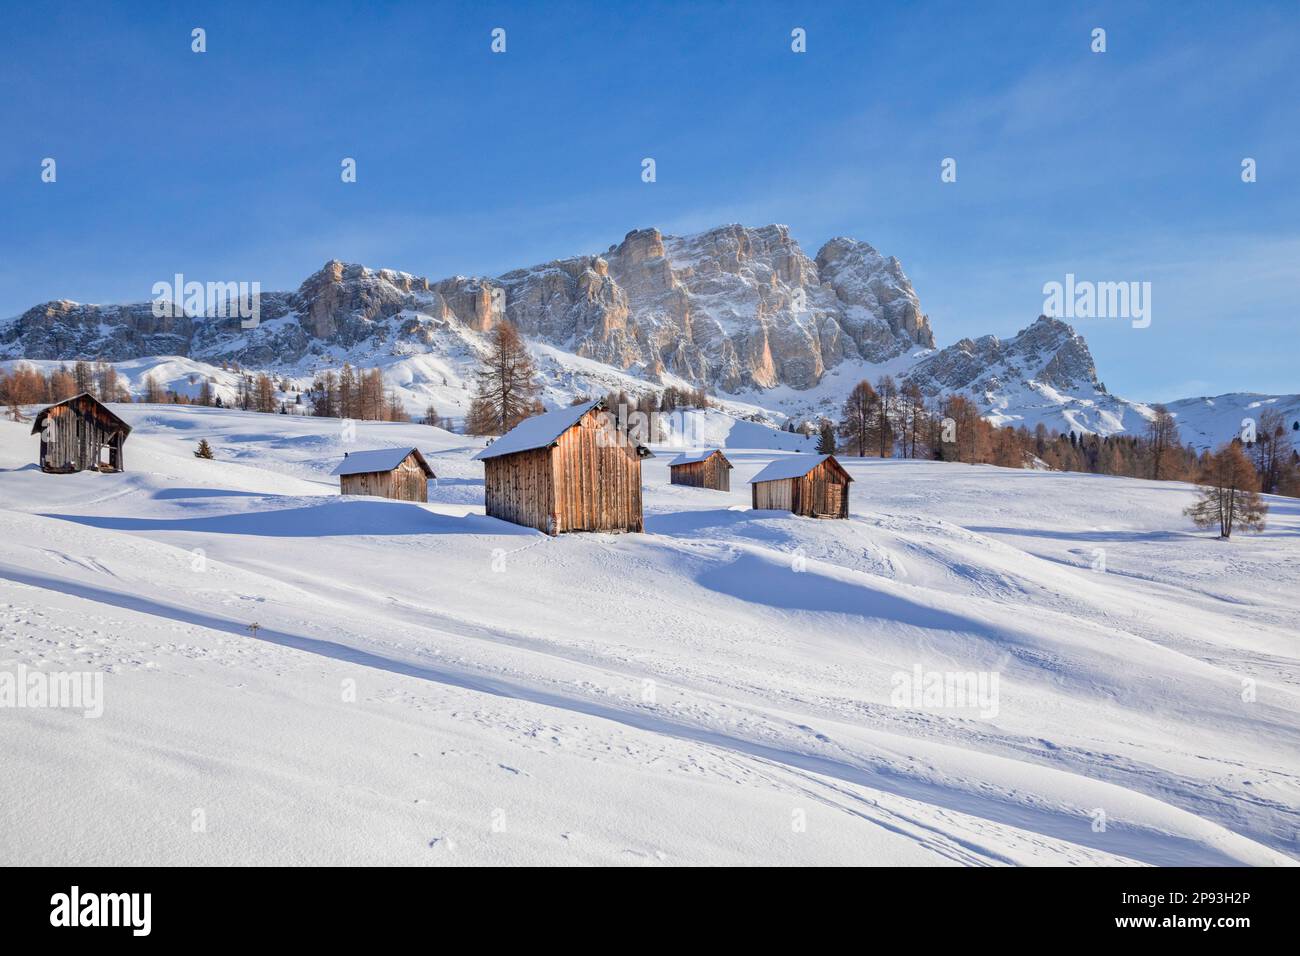 Italy, Veneto, province of Belluno, Livinallongo del Col di Lana, Mont da Contrin, old wooden barns on snowy pastures at the foot of the Setsas mountain range, Dolomites Stock Photo